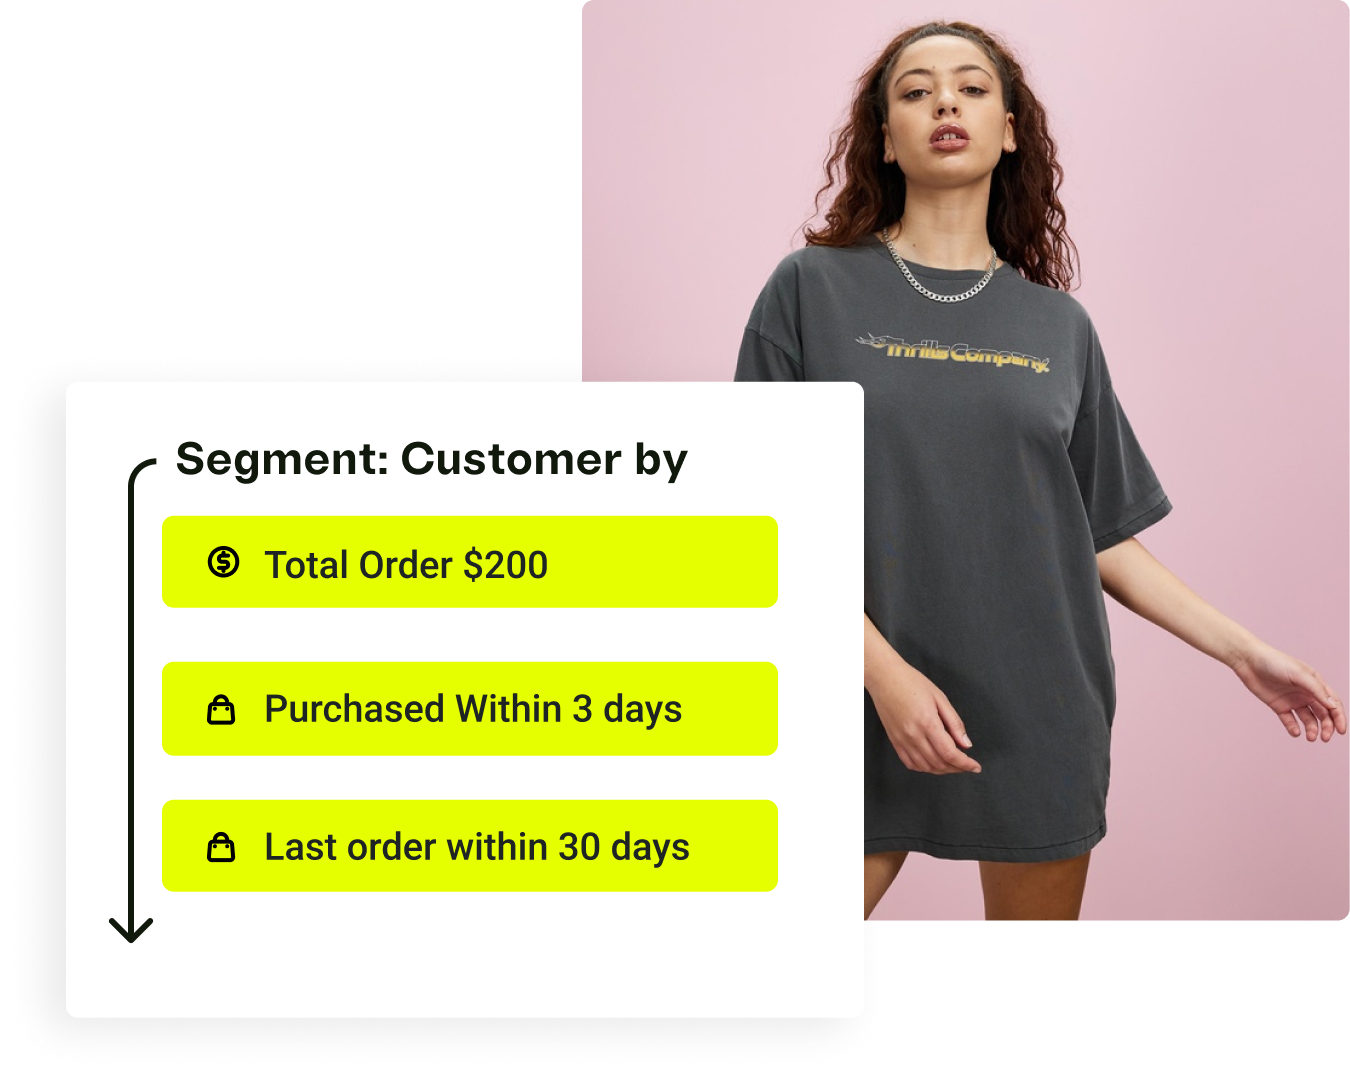 Segment: Customer by